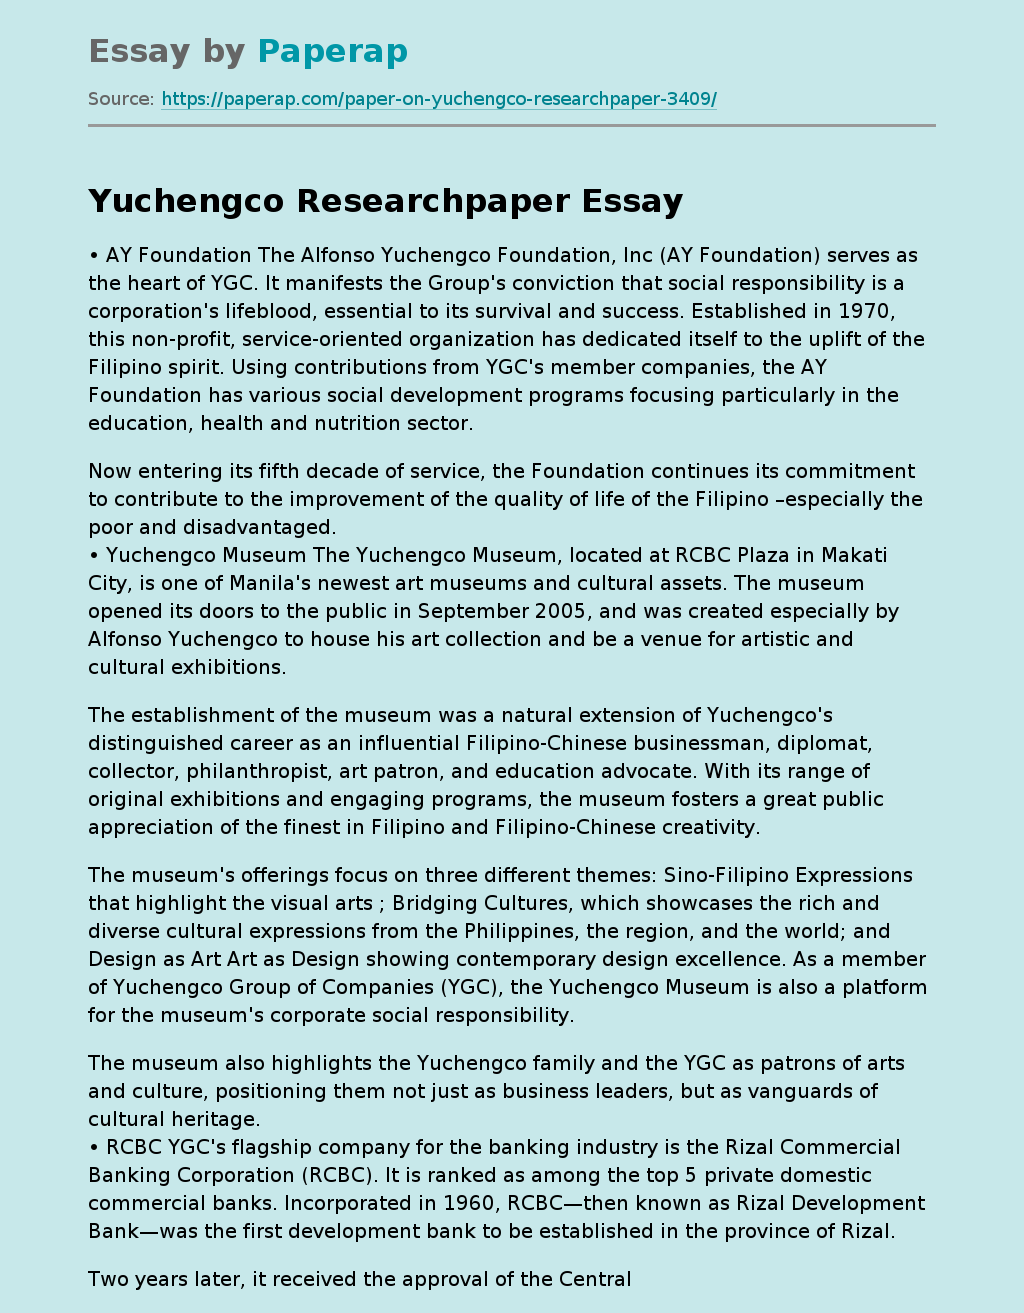 Yuchengco Researchpaper